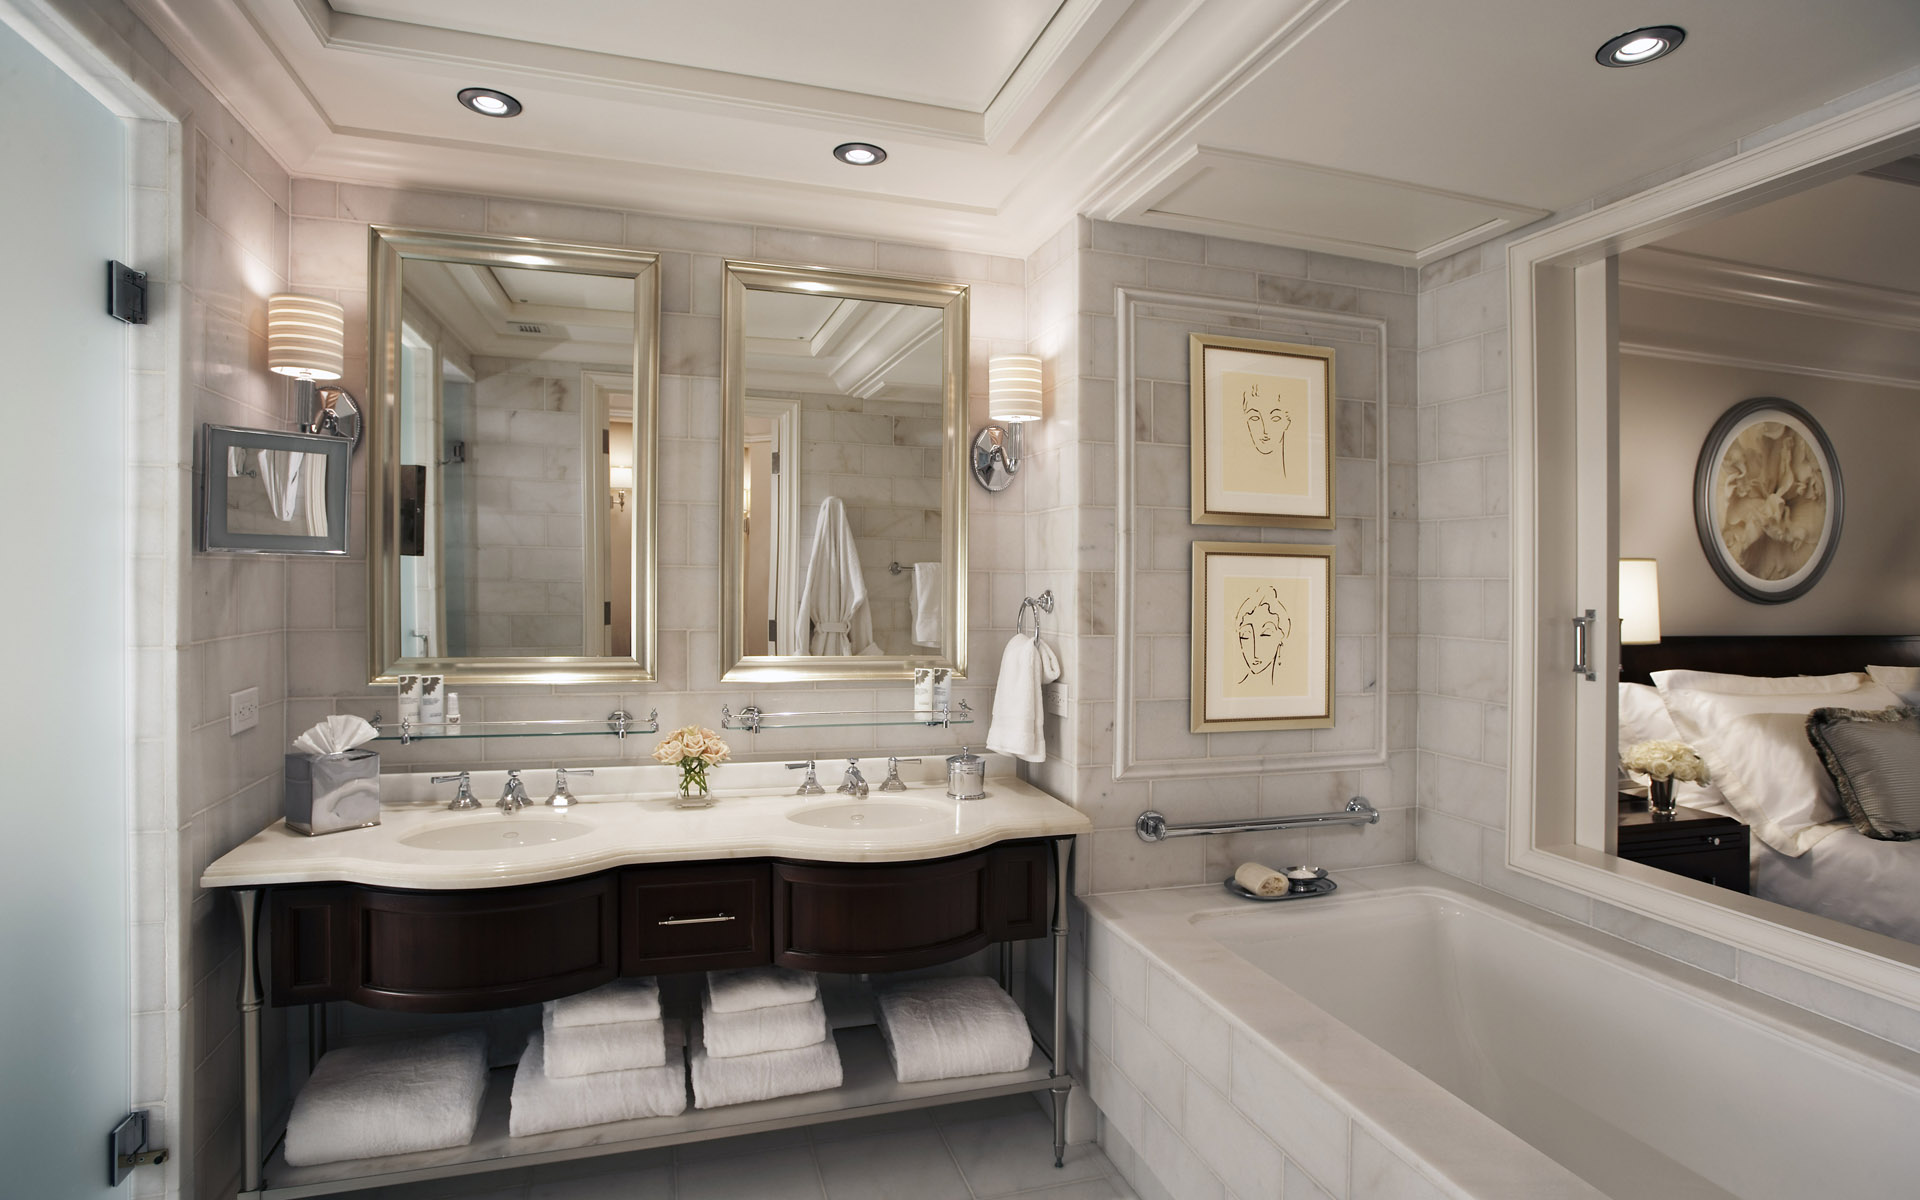 architecture-master-bathroom-floor-plans-room-design-ideas-flooring-house-designs-home-renovation-new-bathrooms-guest-how-to-ensuite-tile-interior-designer-bath-design-gallery-restroom-design.jpg